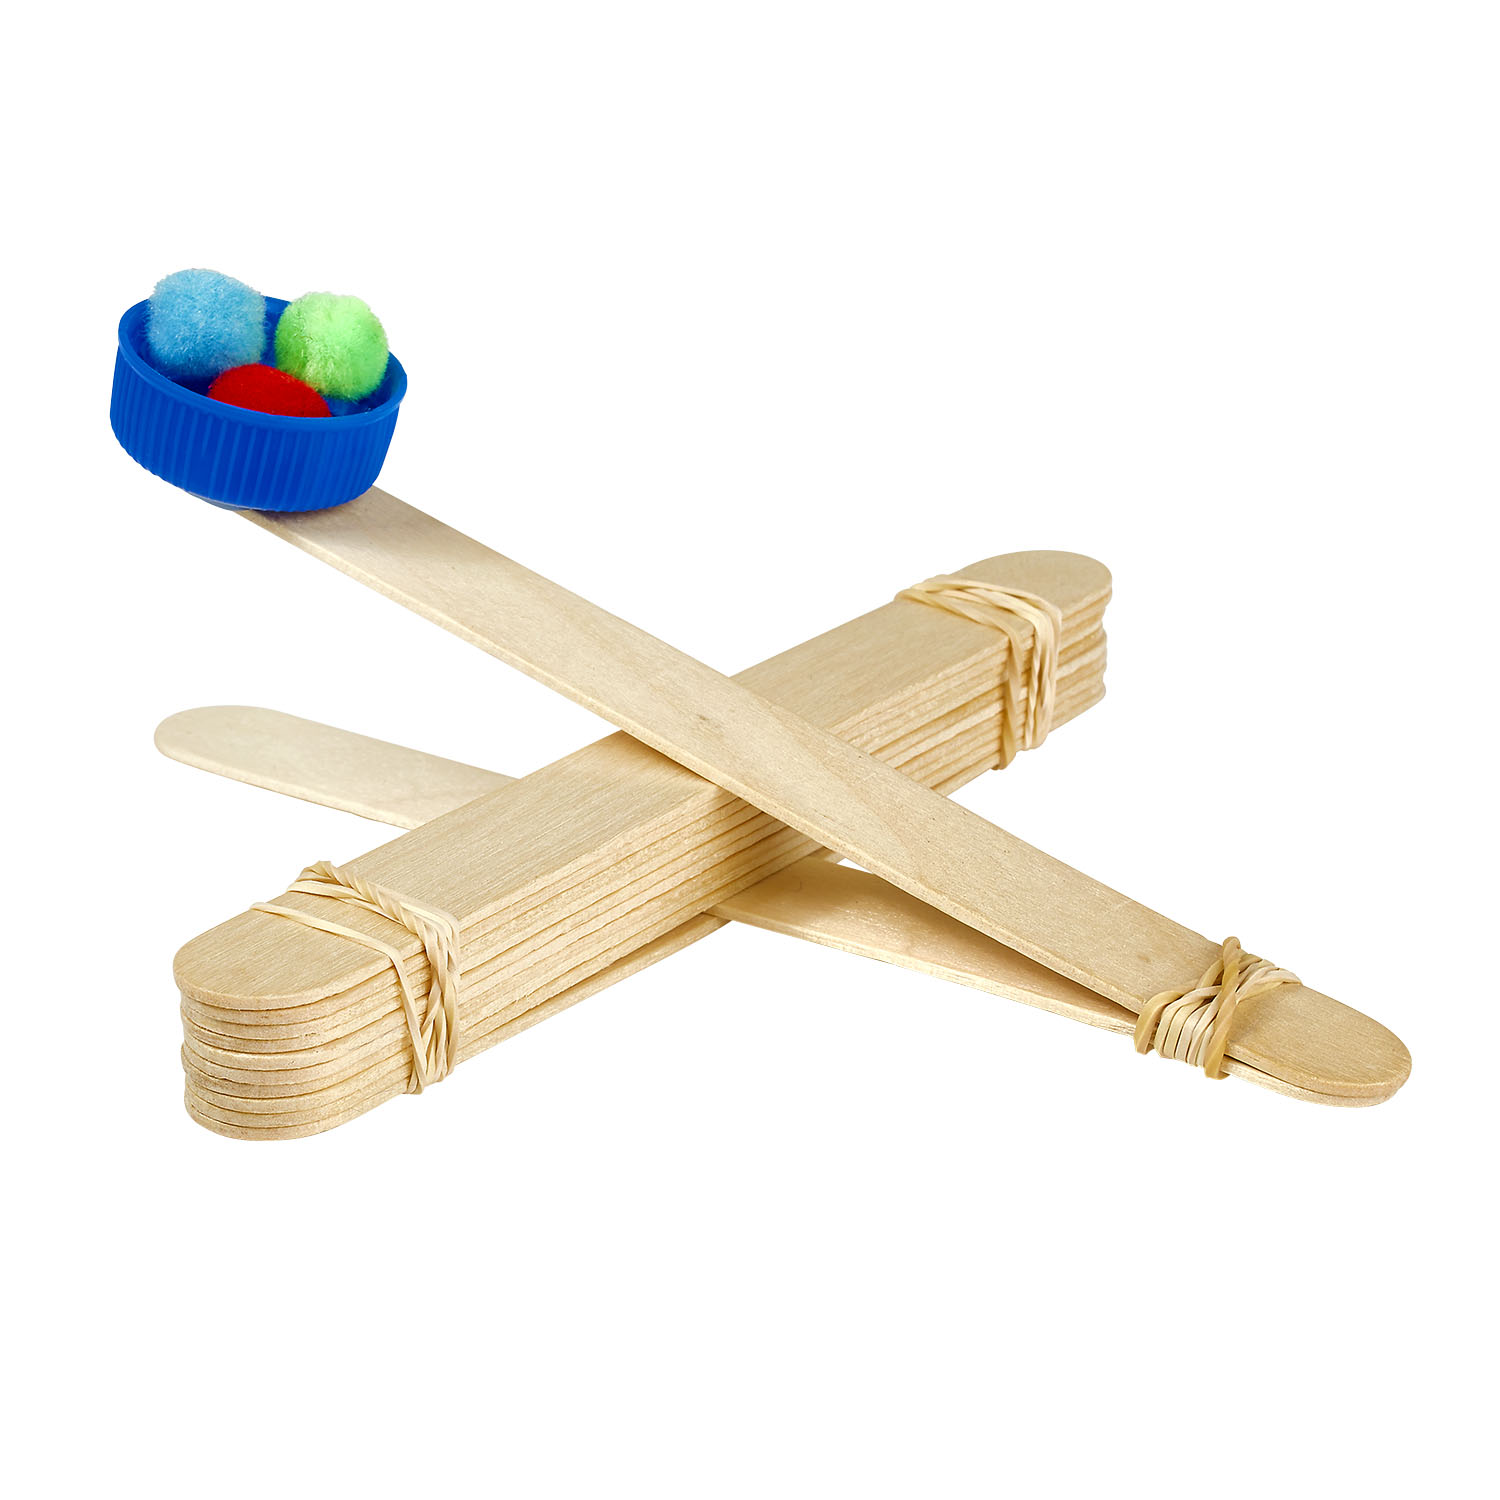 Artful Goods Wood Craft Sticks, Jumbo size, Bright Colors